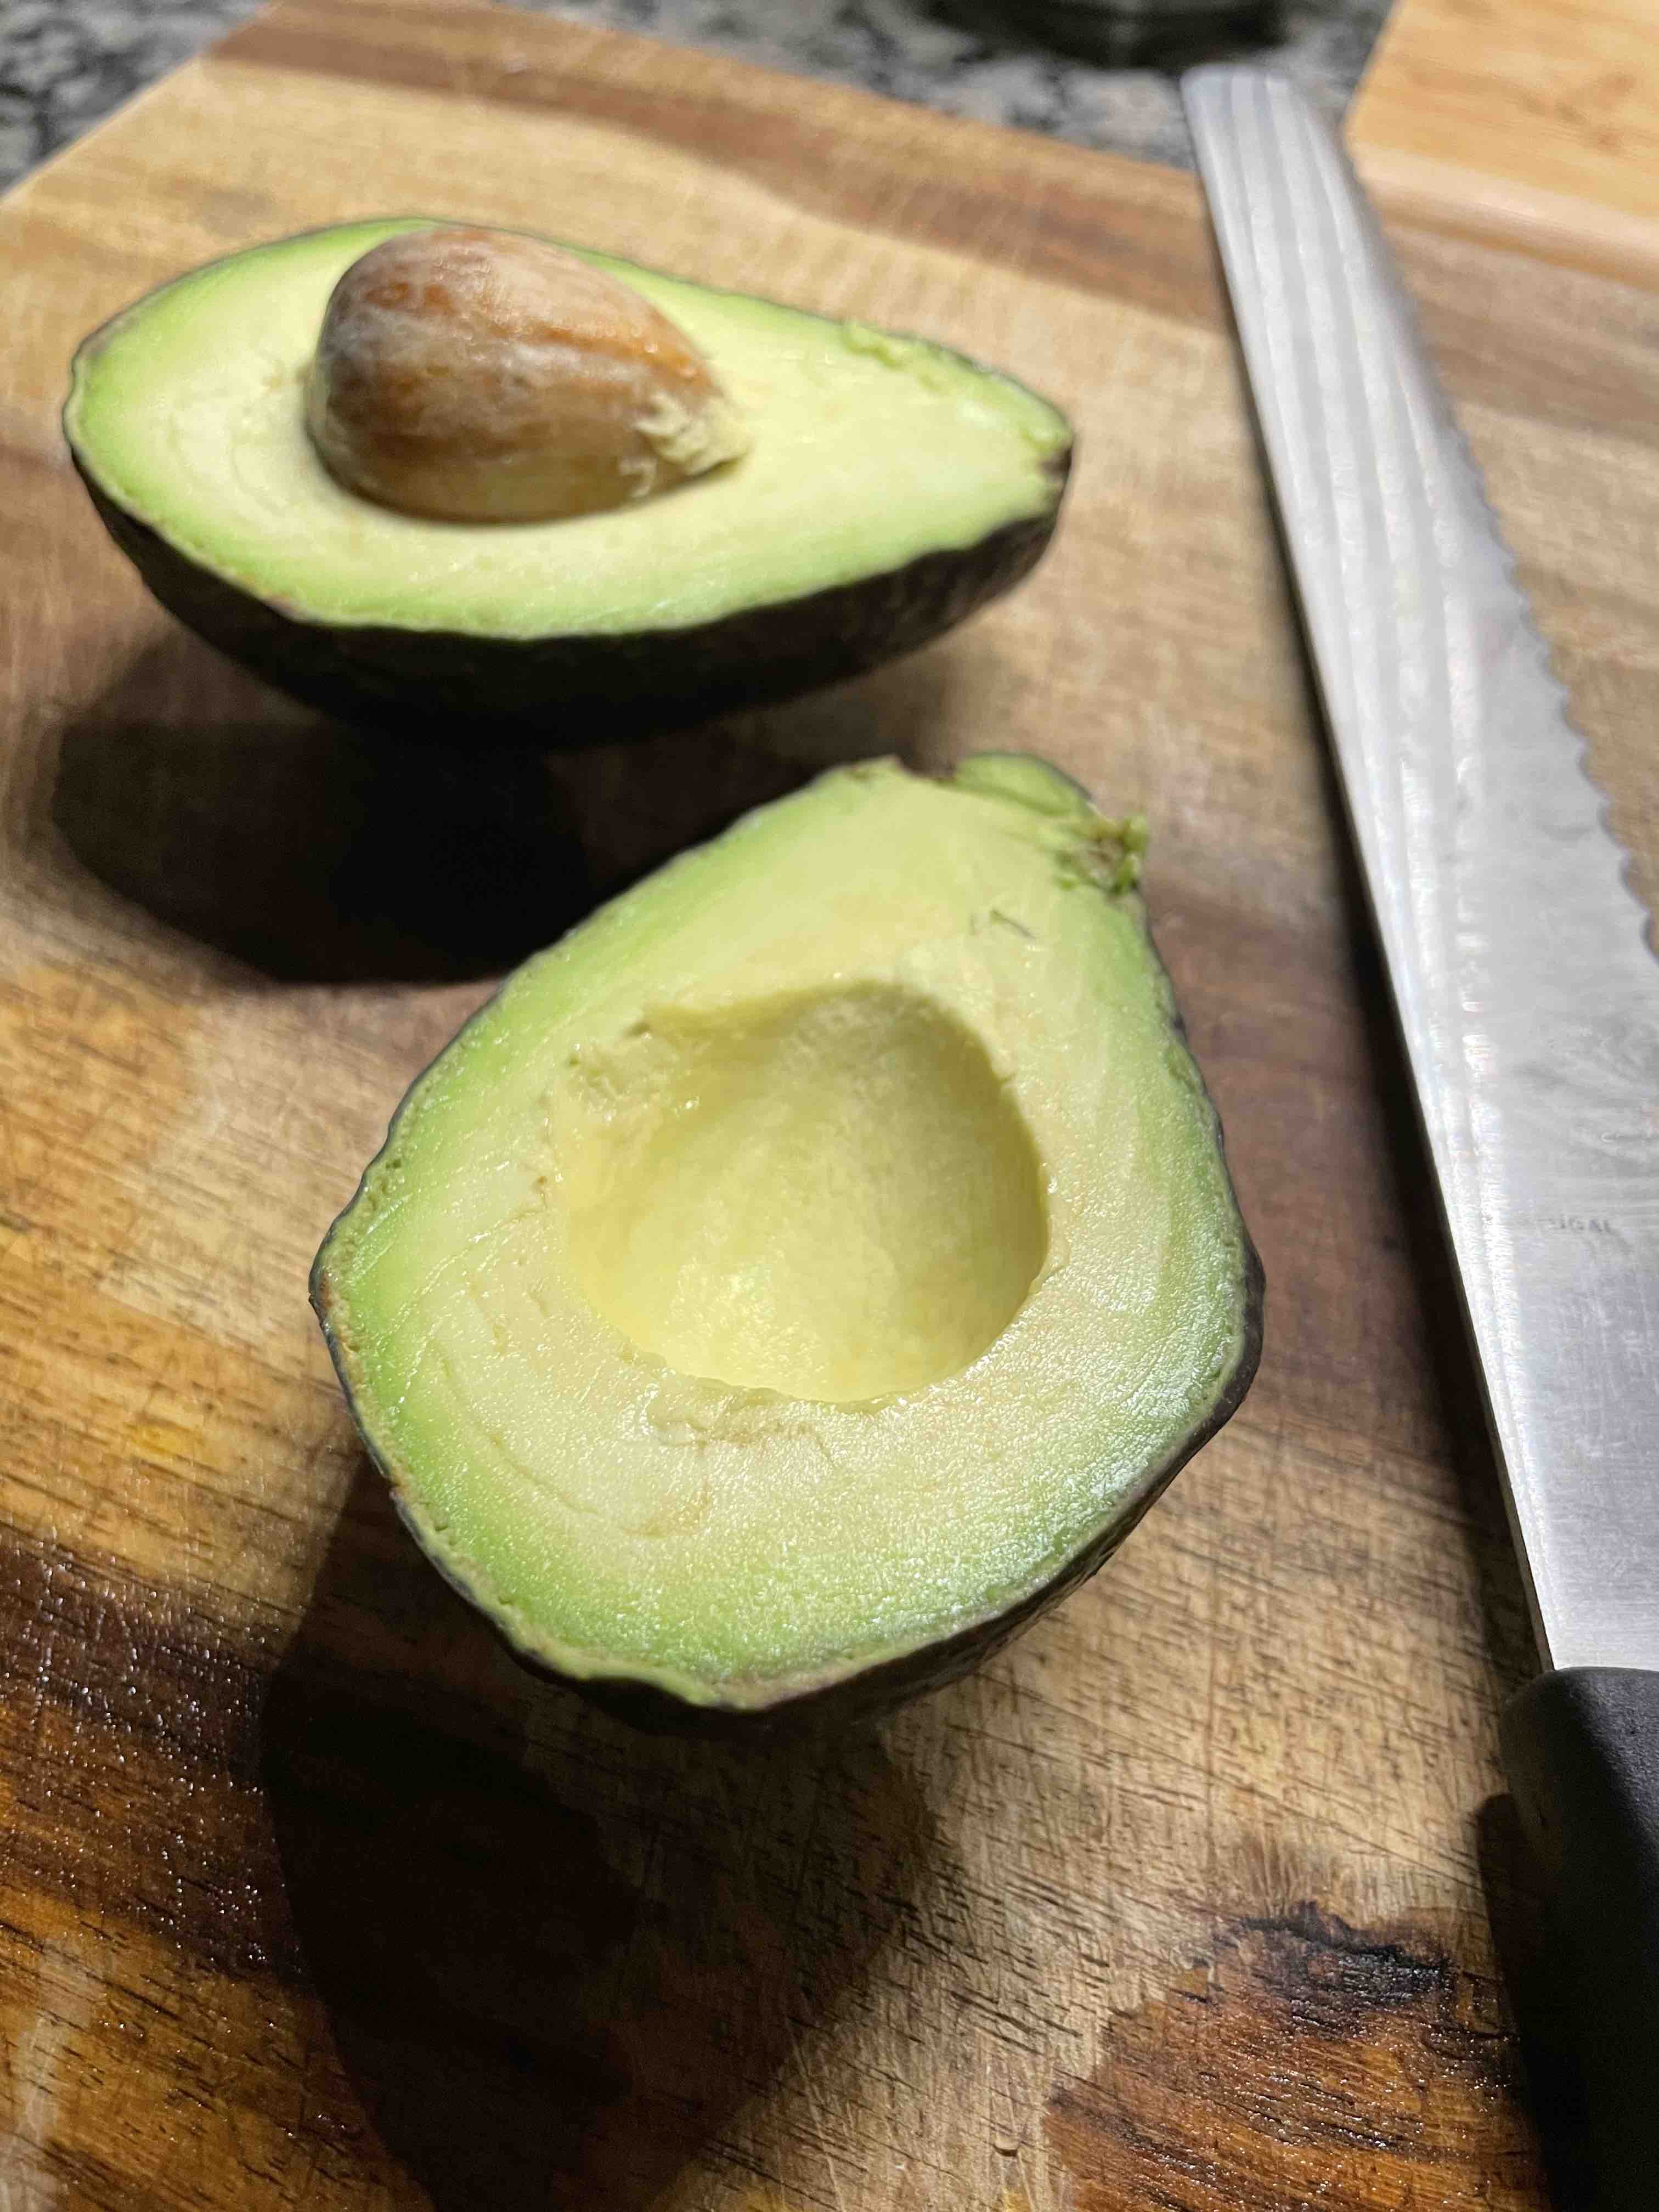 A cut avocado